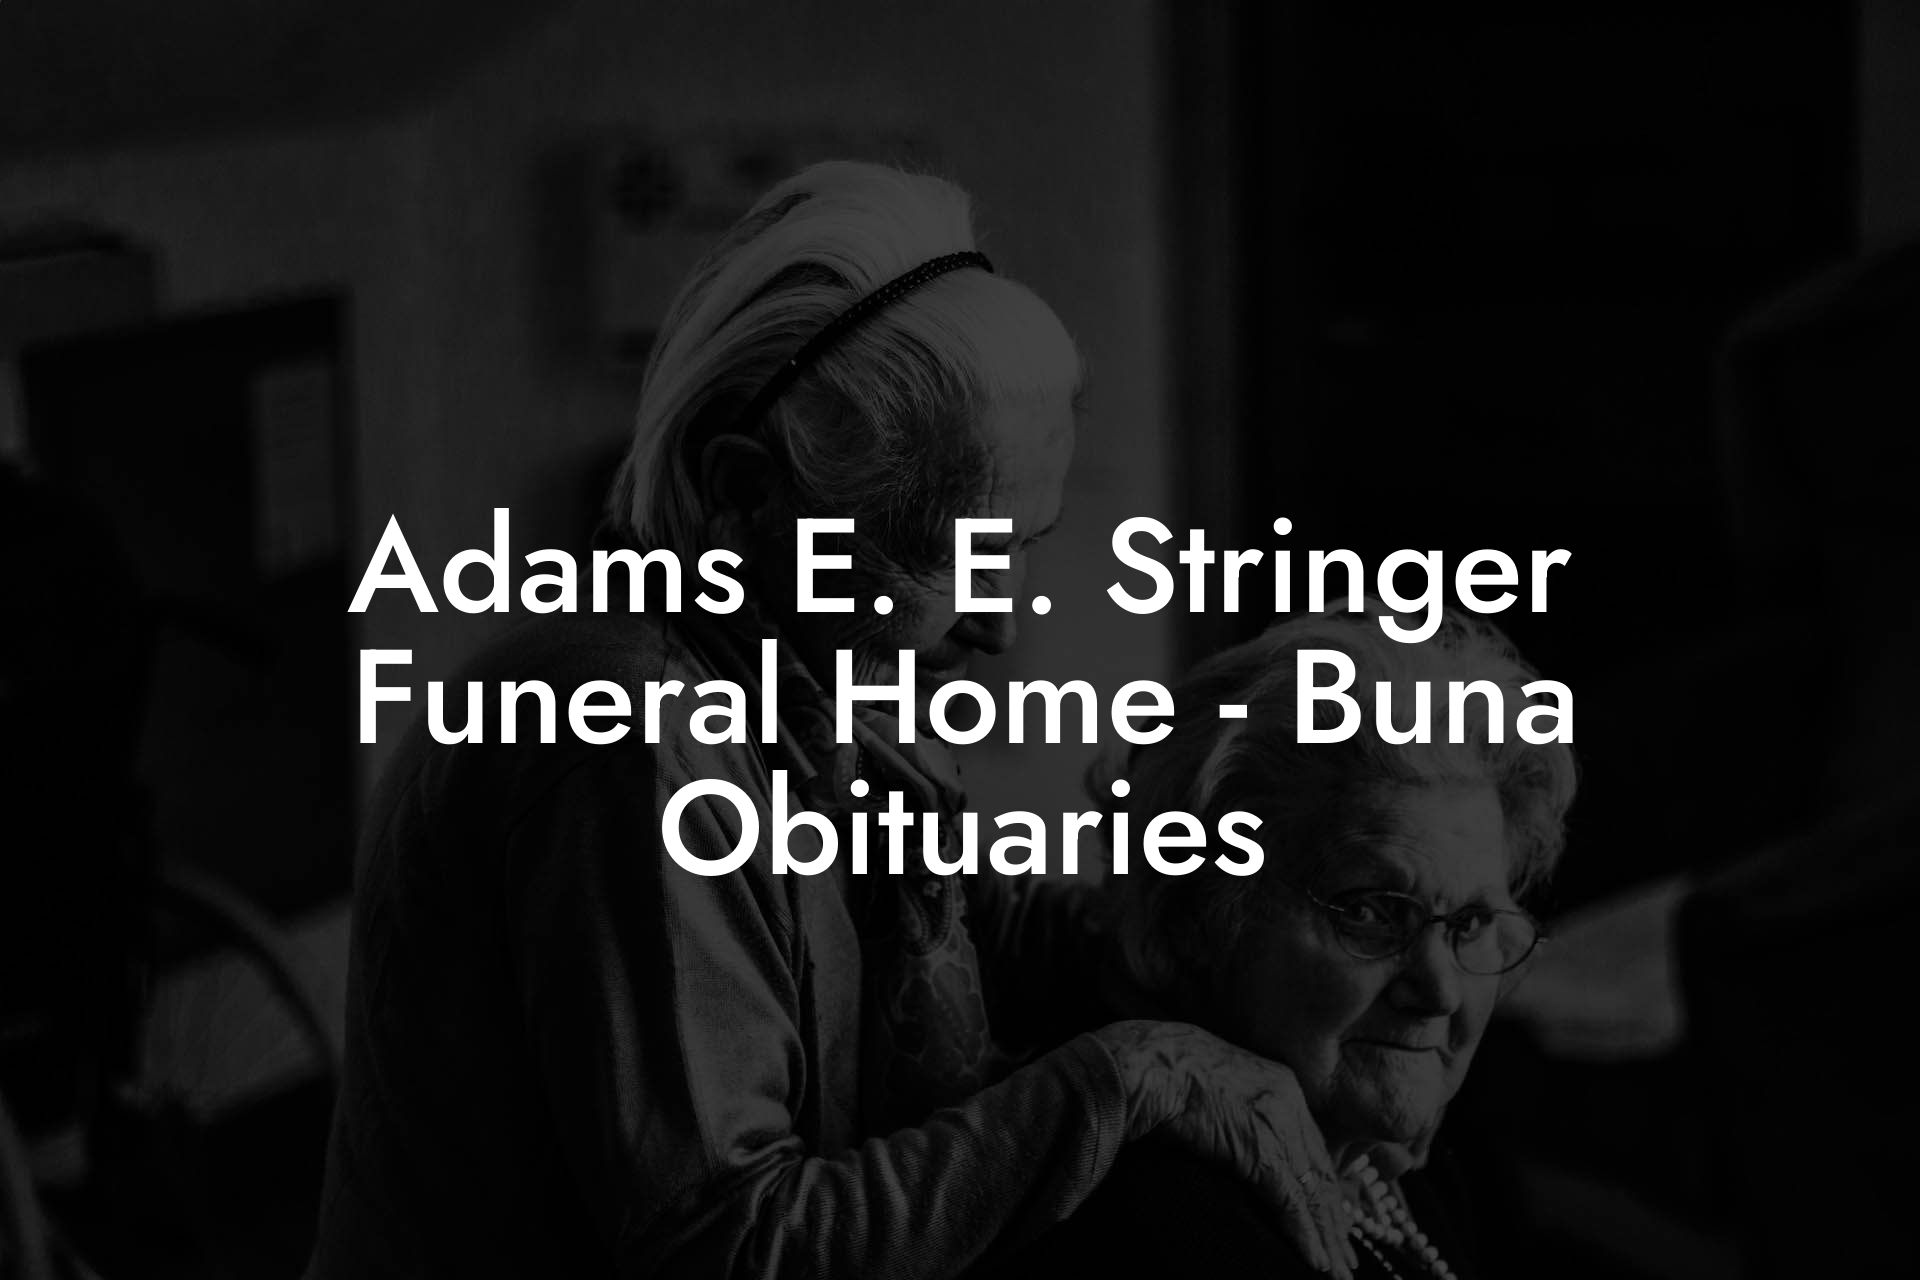 Adams E. E. Stringer Funeral Home - Buna Obituaries